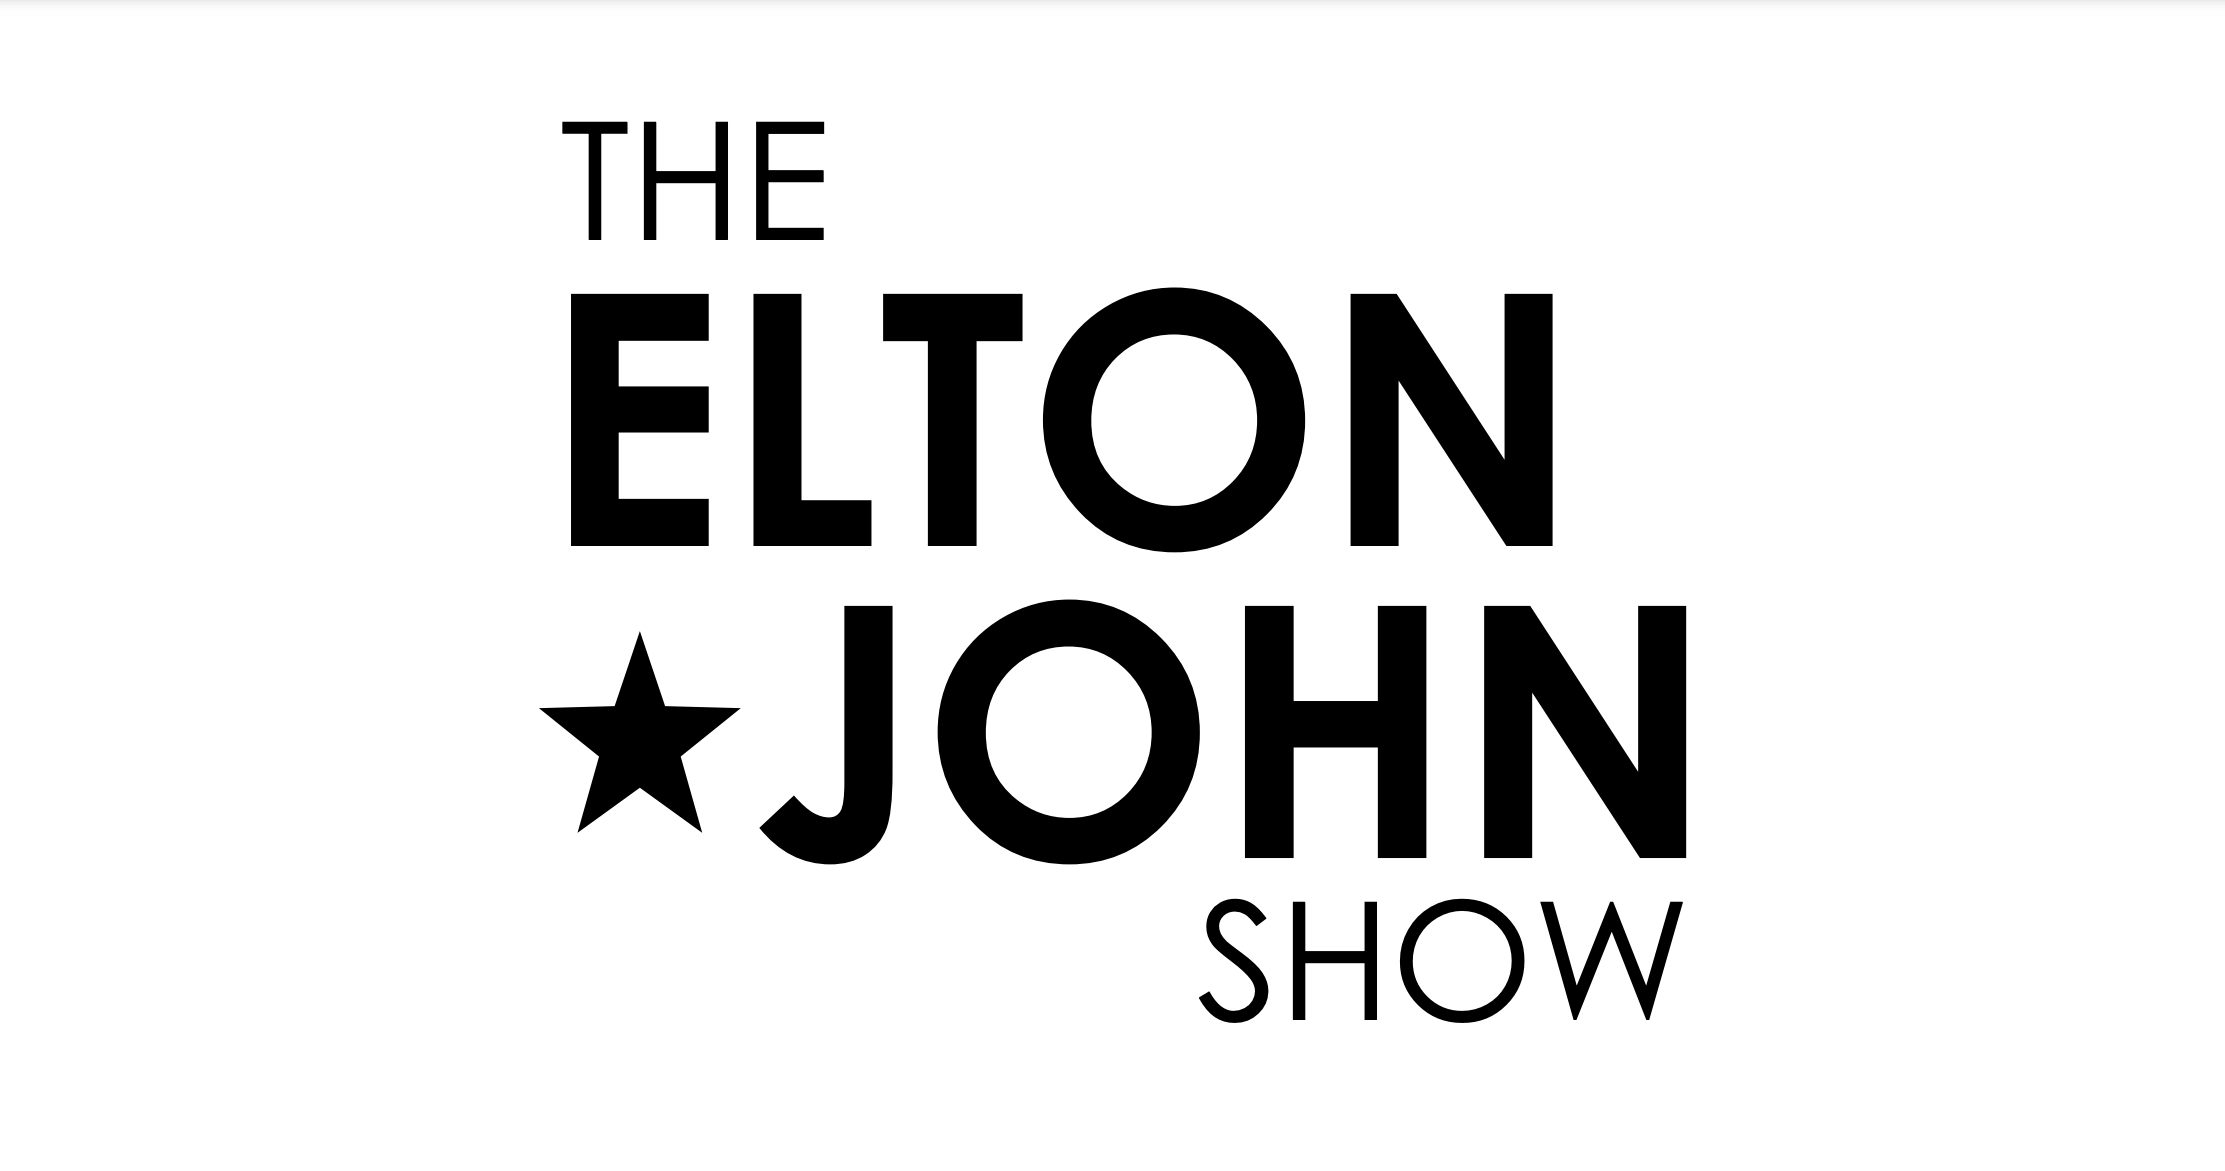 The Songs of Elton John - Performed By Jason Dean (Superband) - Dinner & Show!